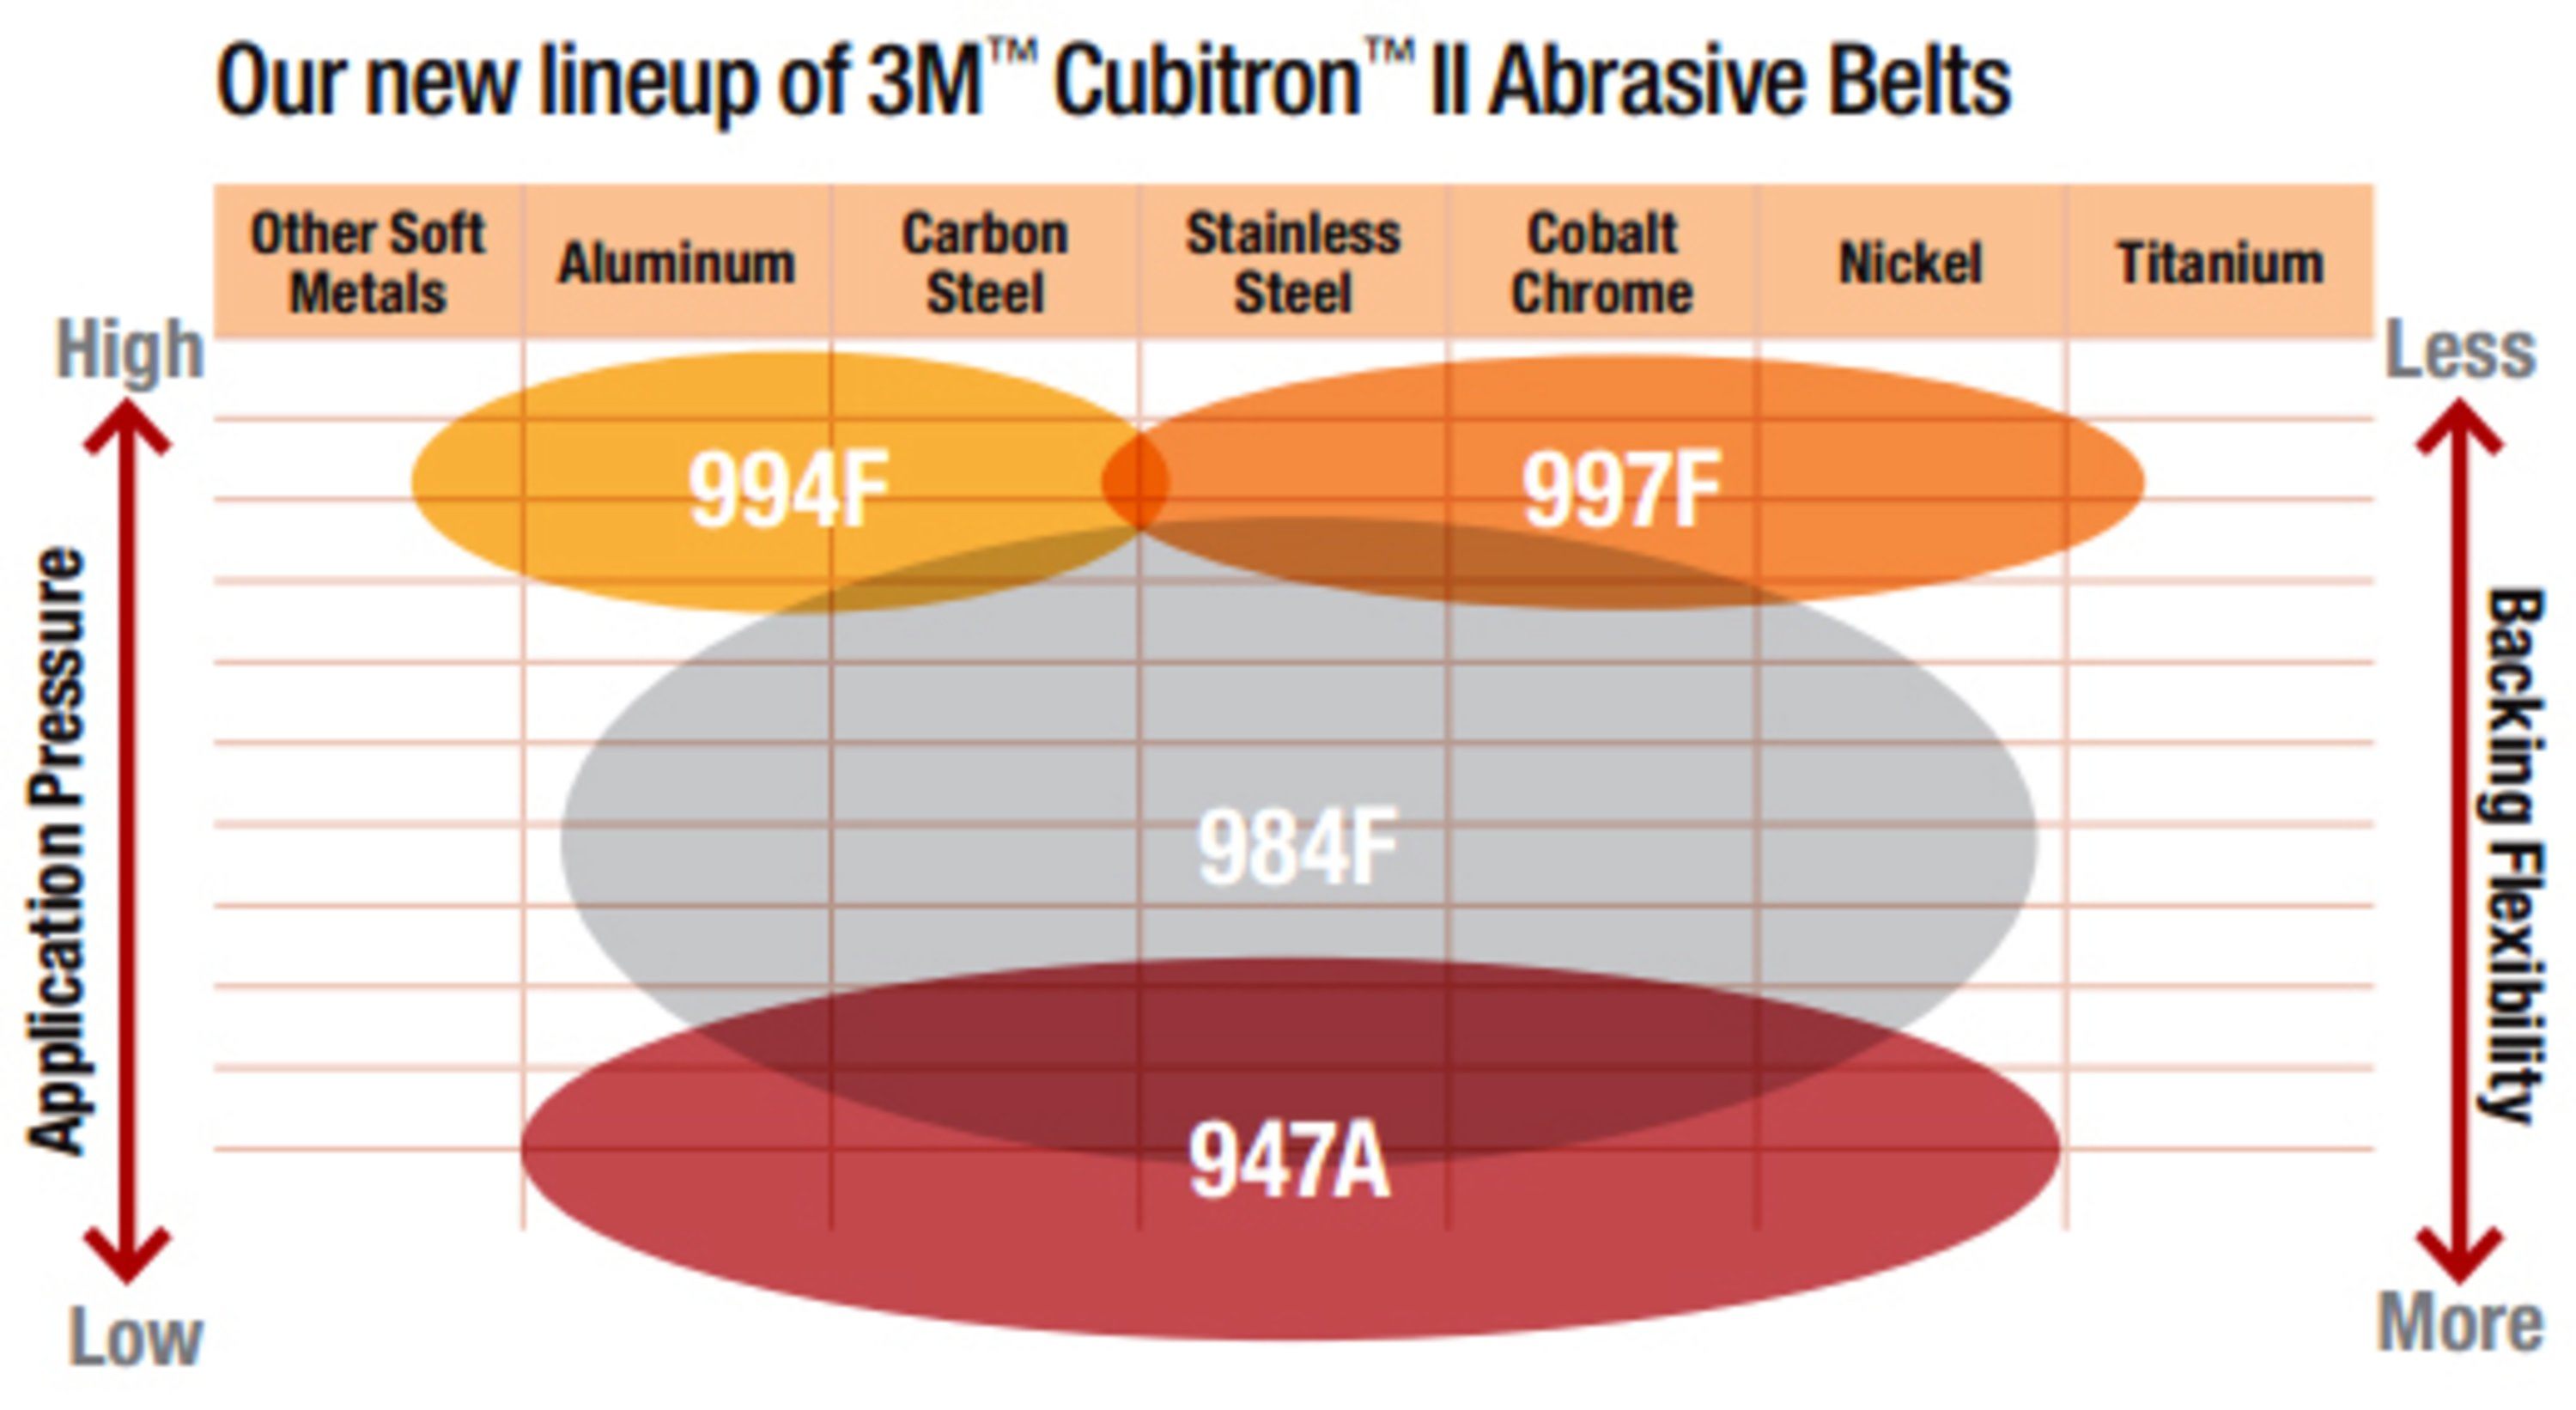 cubitron-ii-abrasive-belts-lineup